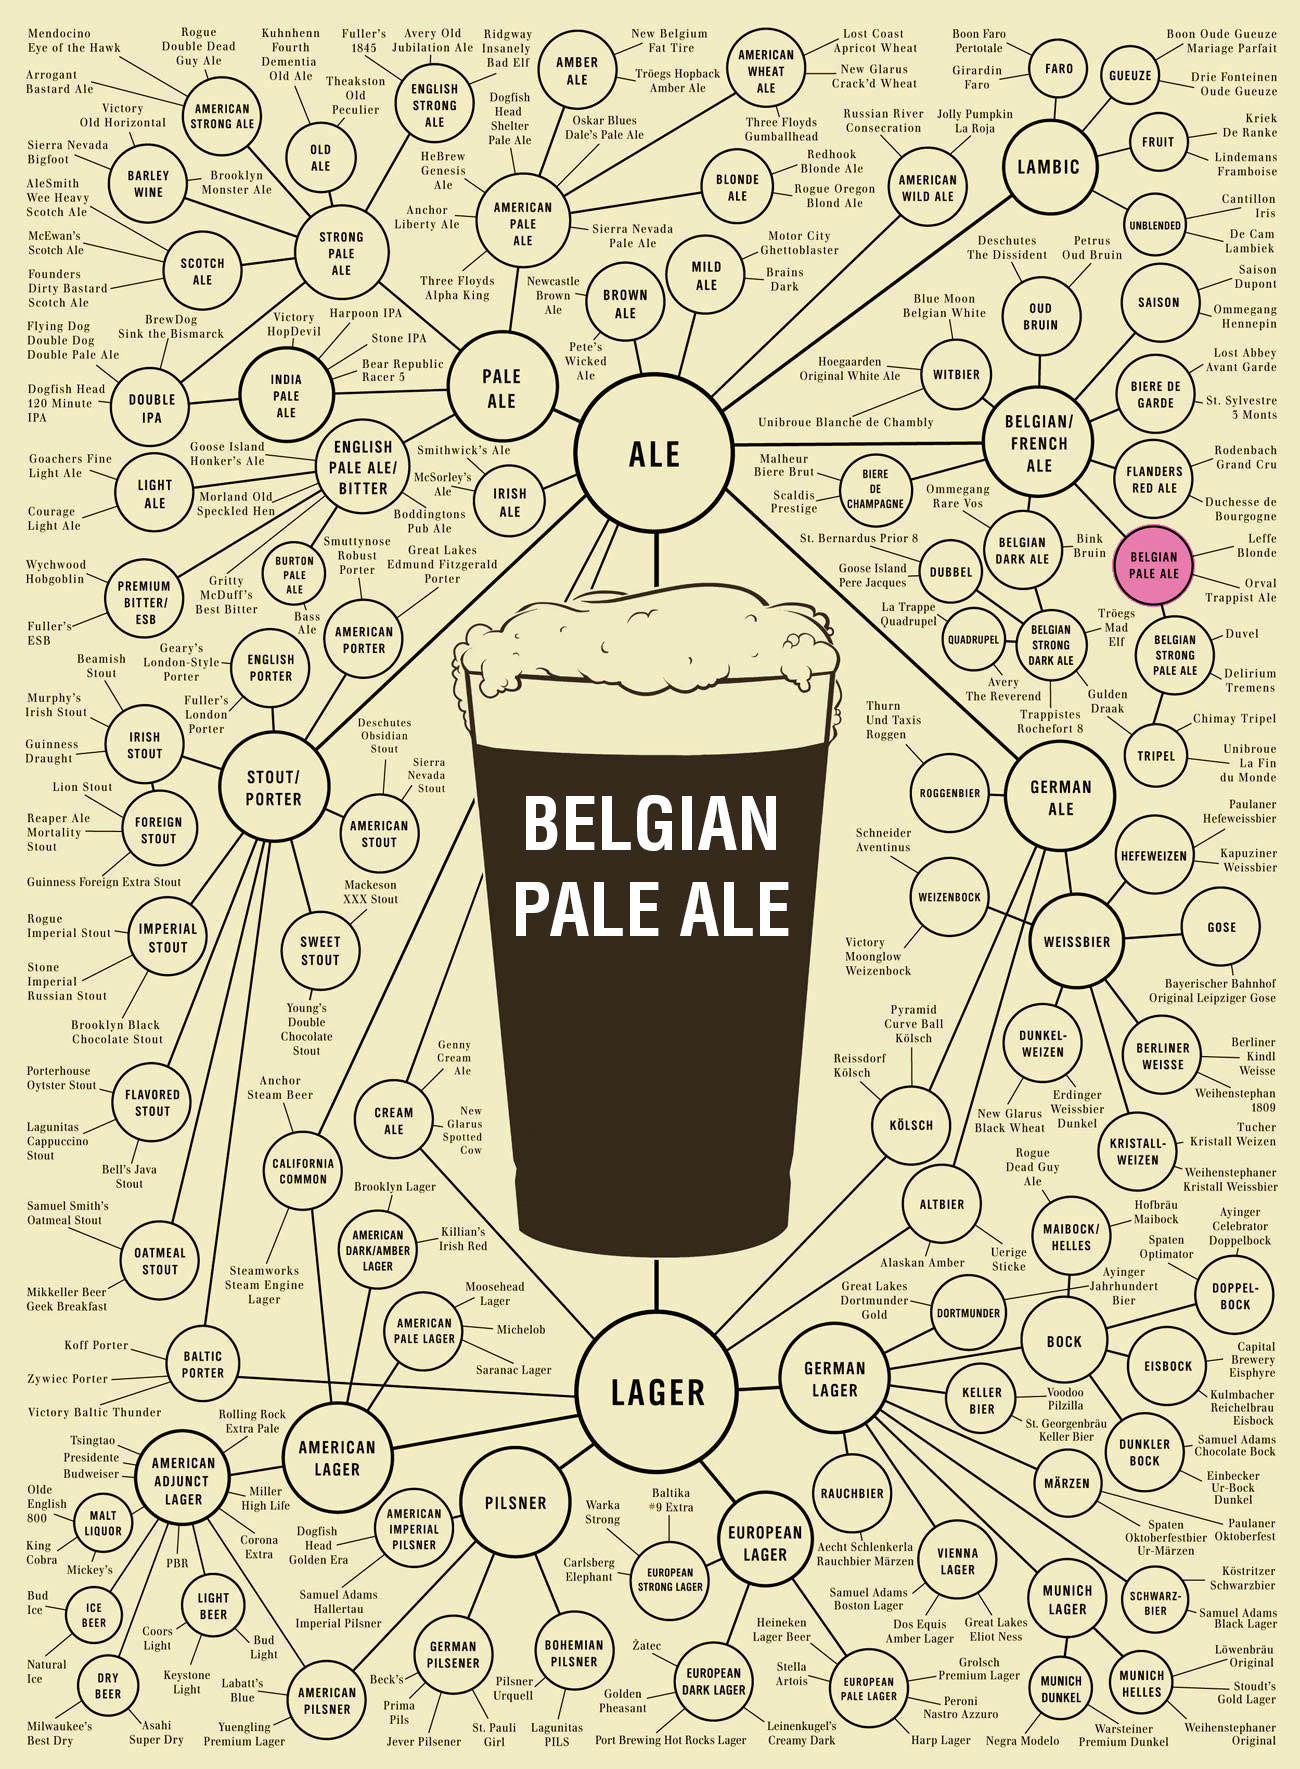 Belgian Pale Ale